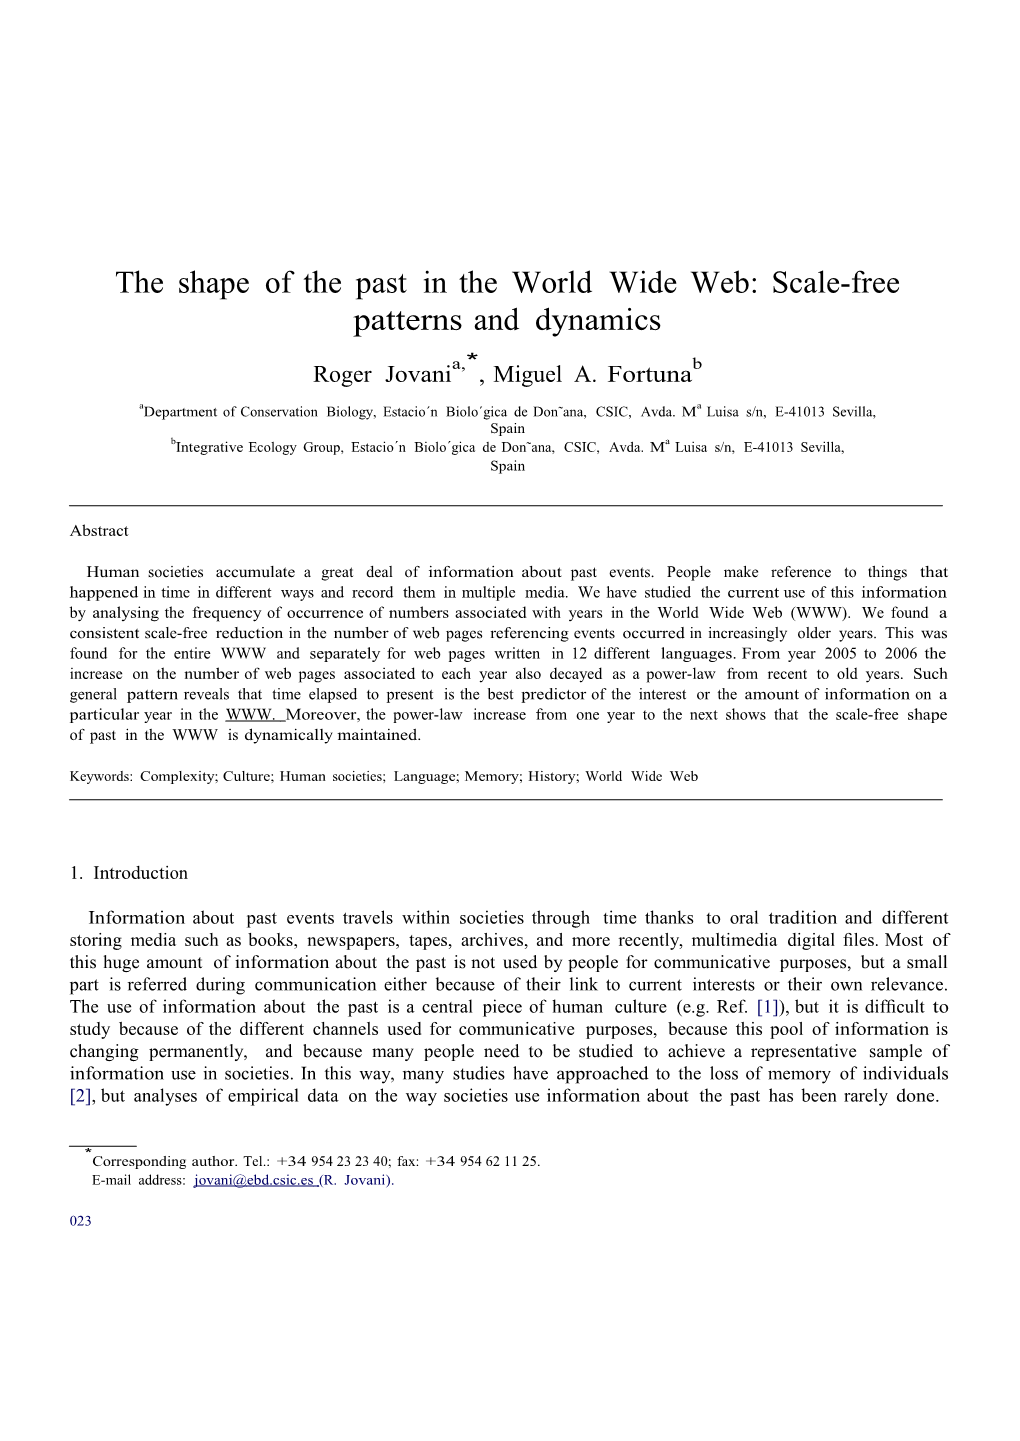 Theshapeofthepastintheworld Wideweb:Scale-Free Patternsanddynamics